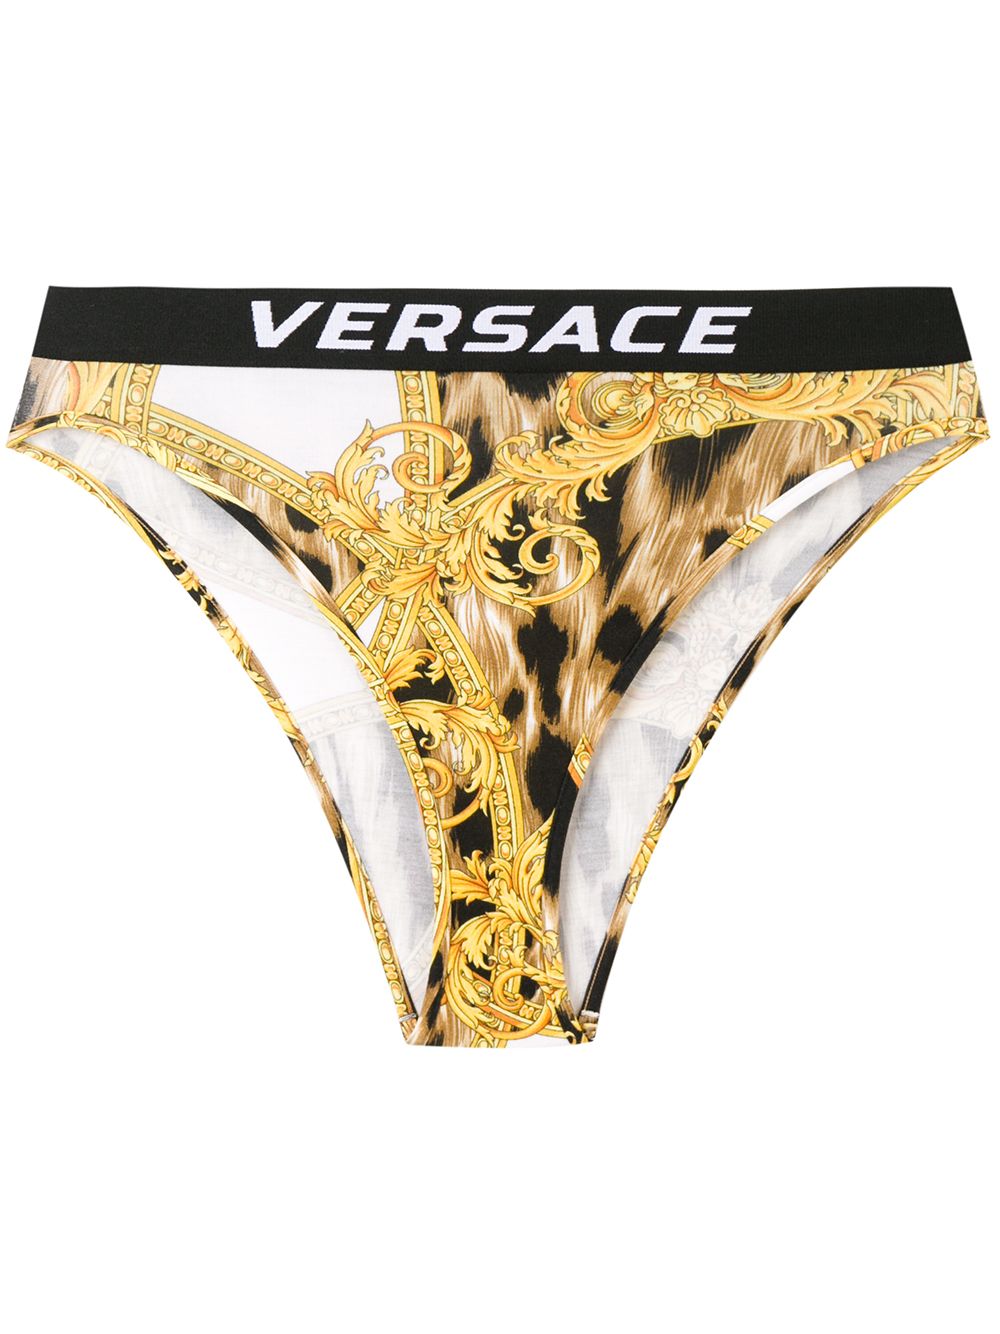 фото Versace плавки бикини с леопардовым принтом